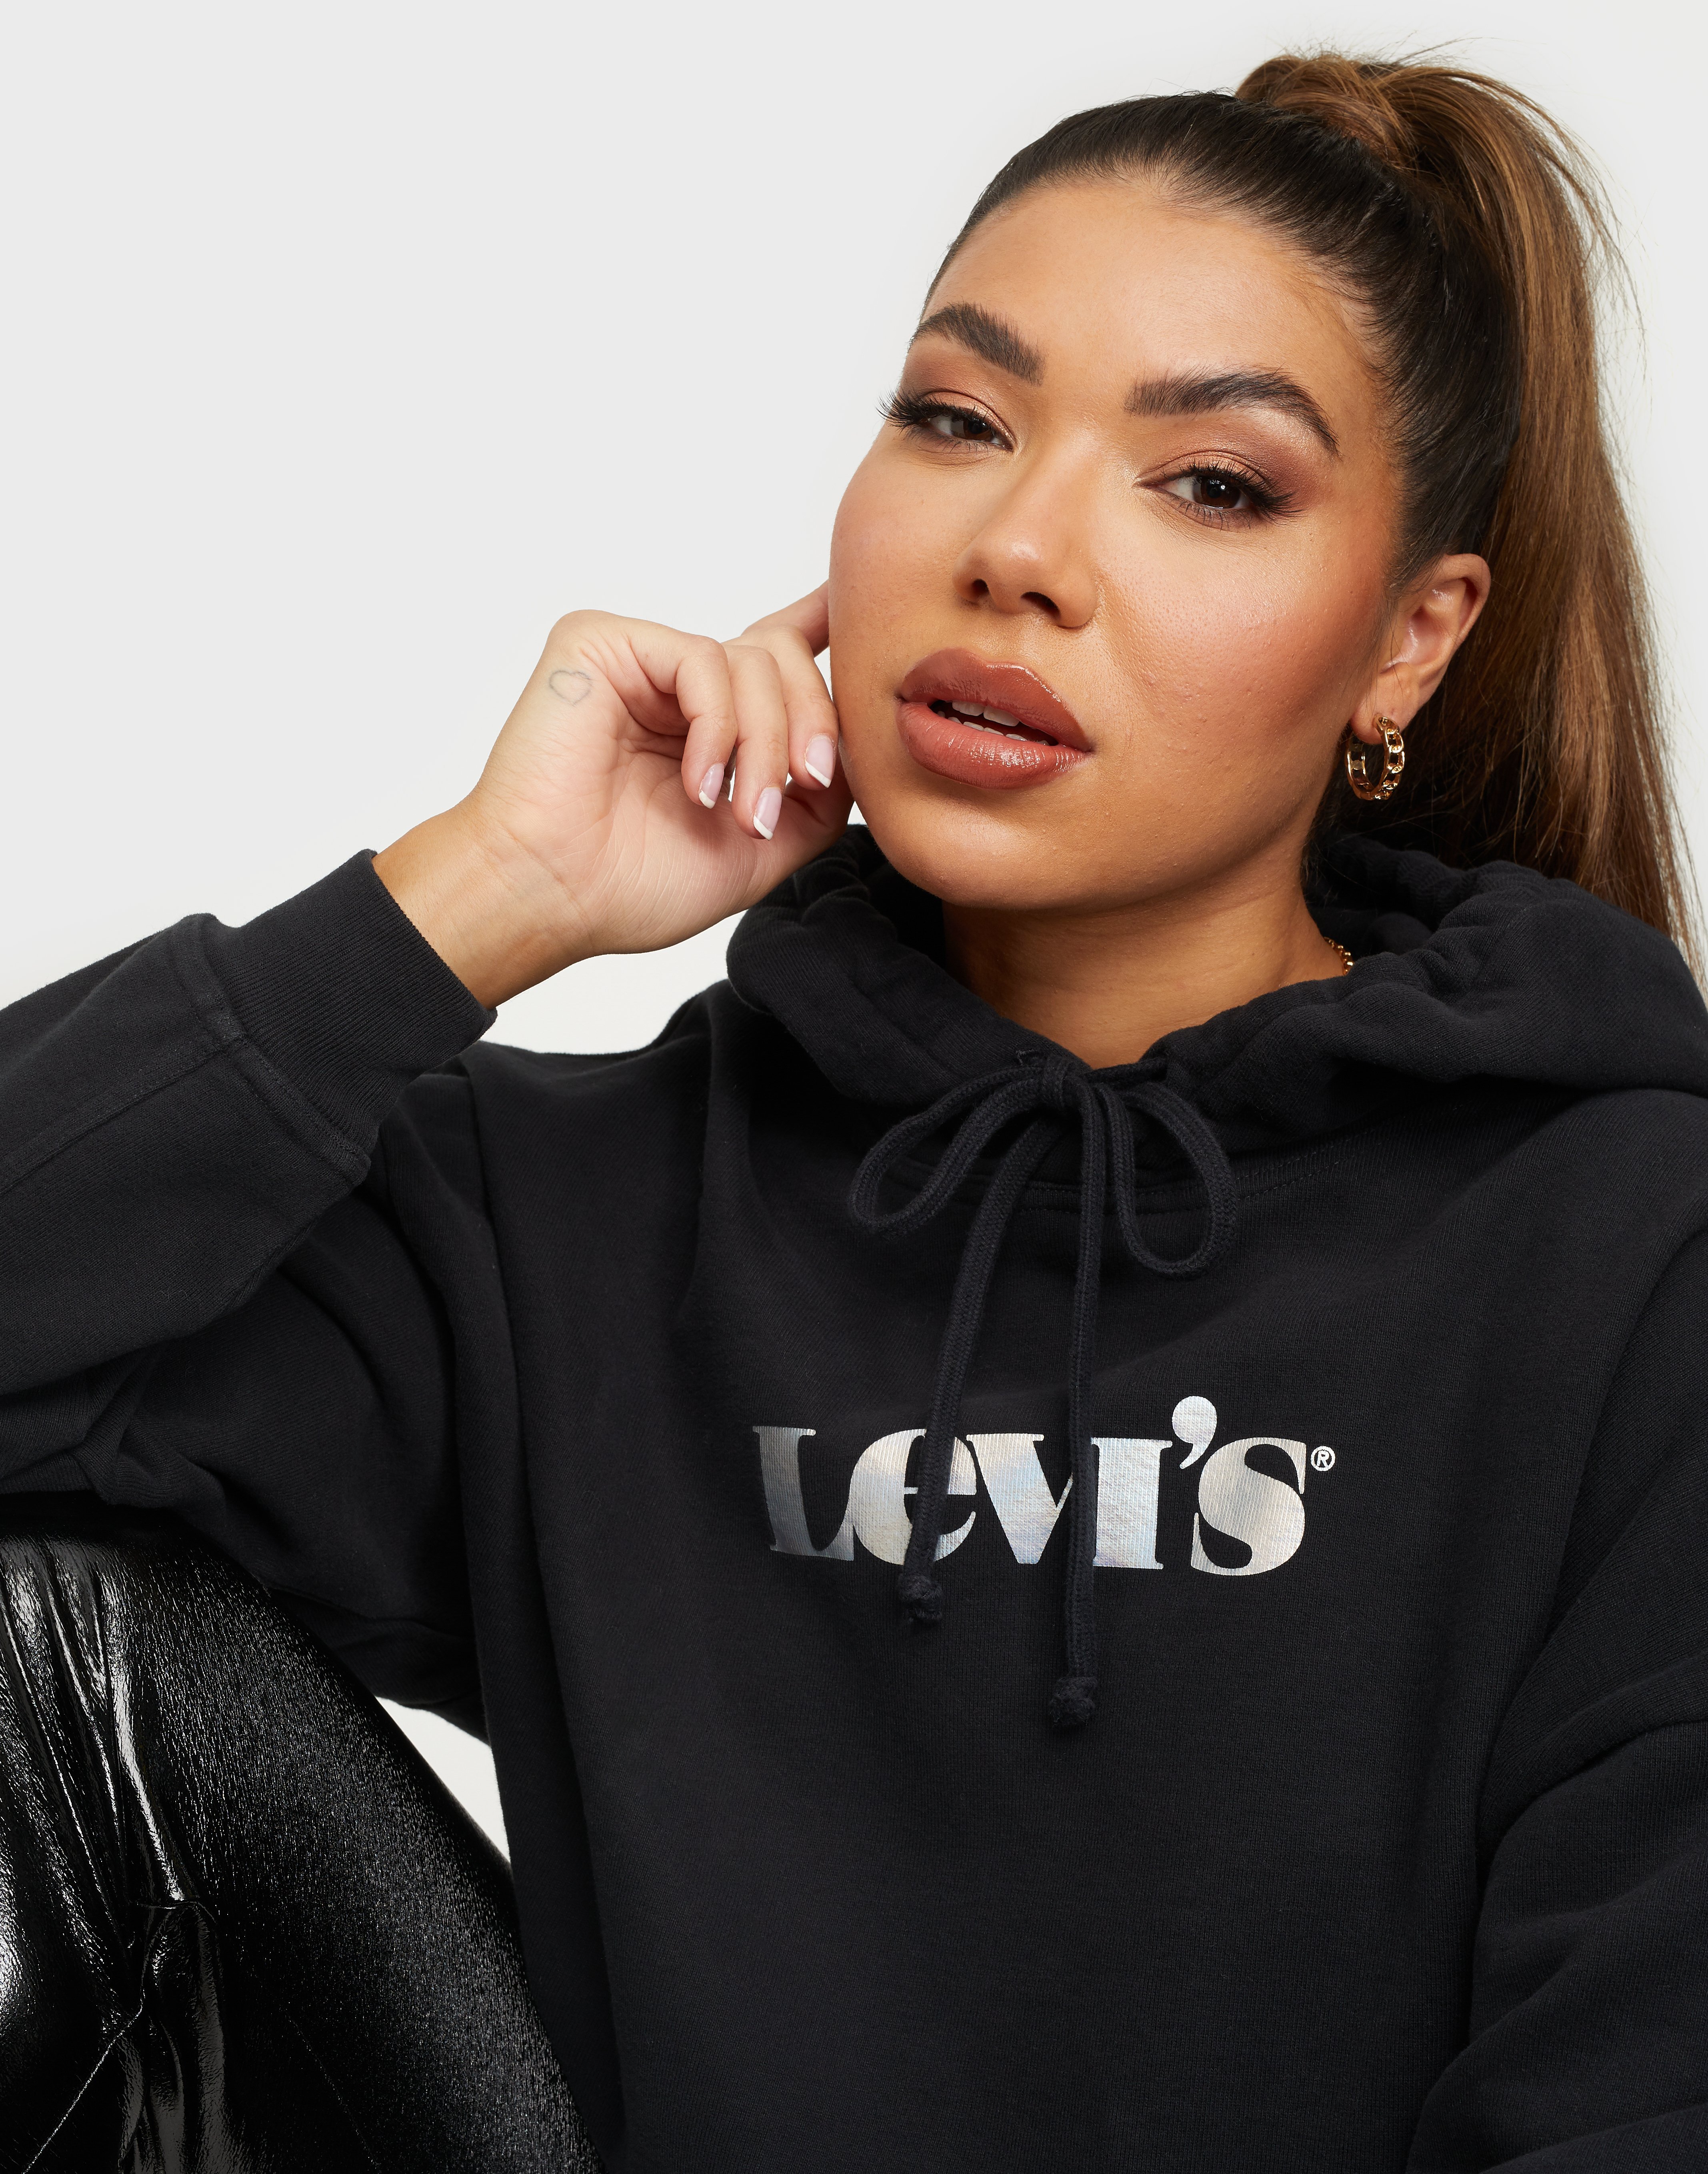 levi's graphic hoodie